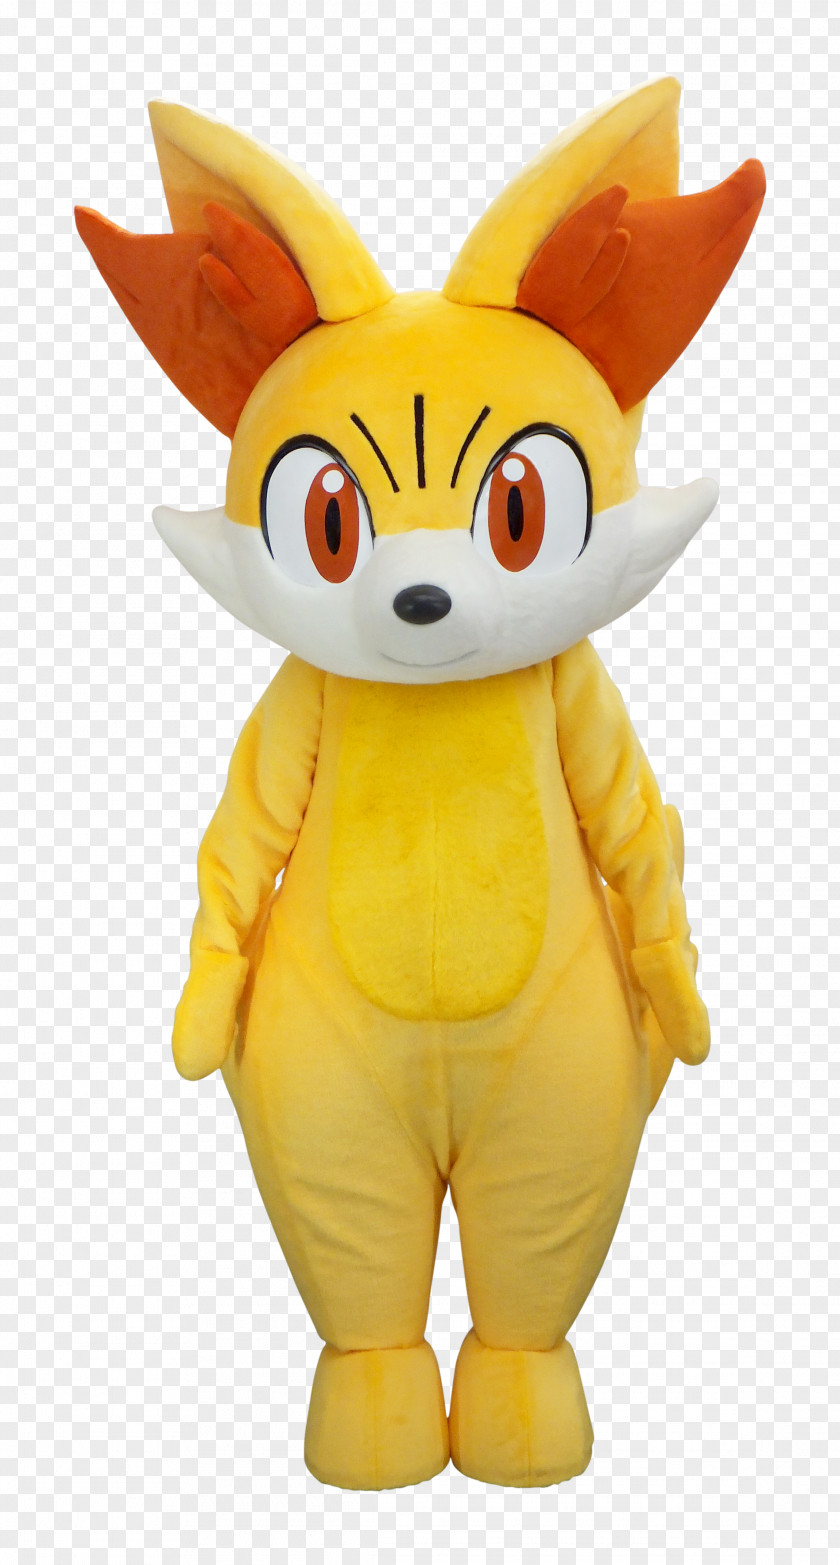 Plush Stuffed Animals & Cuddly Toys Mascot Textile PNG